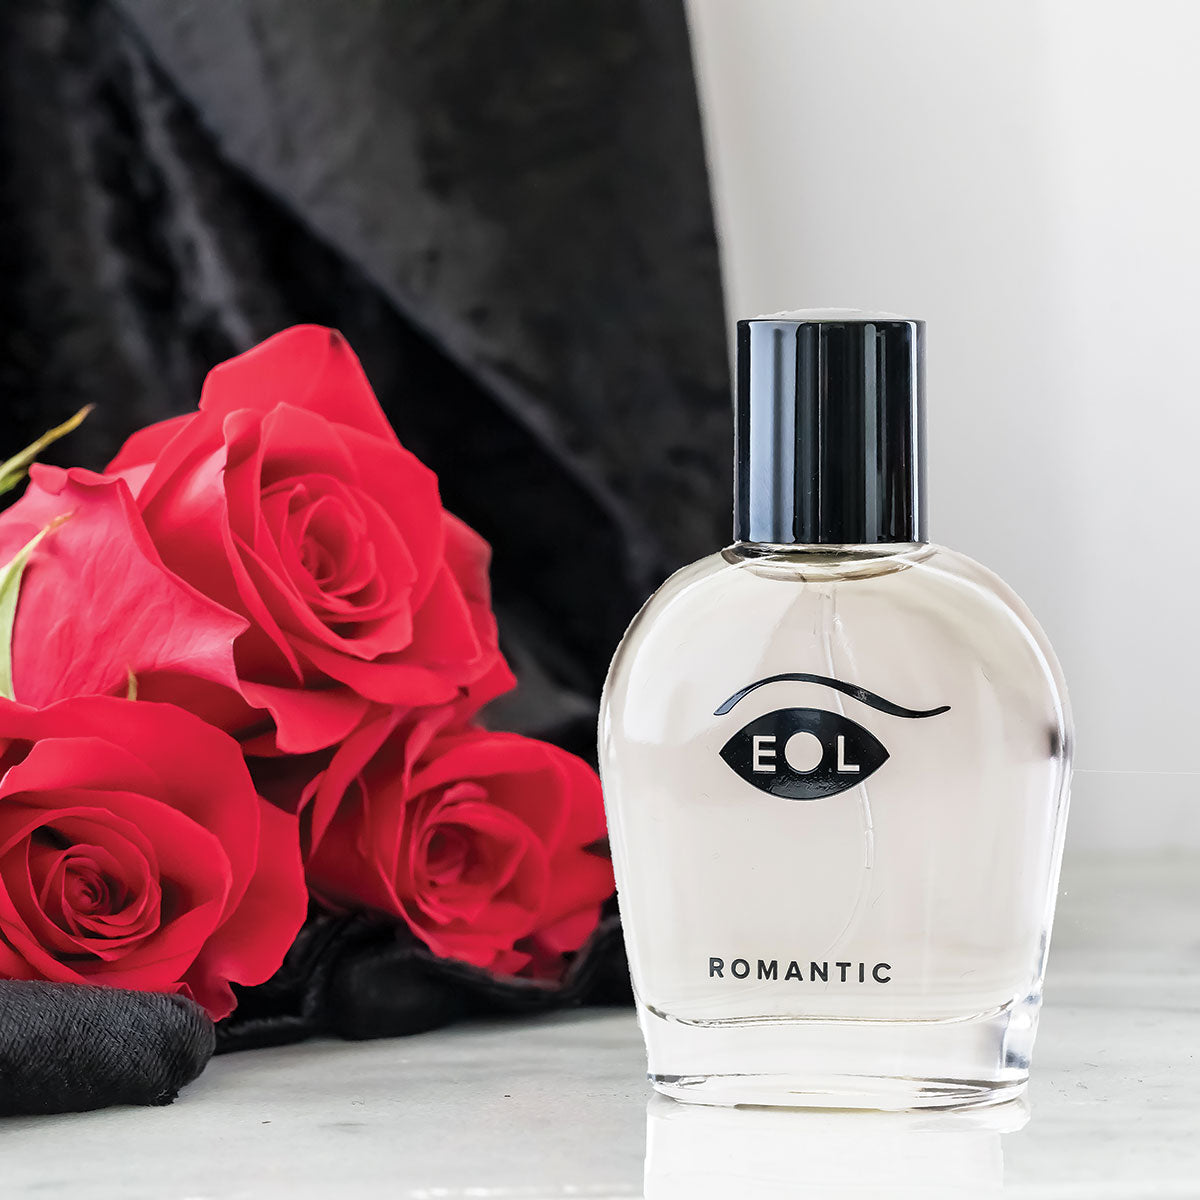 Eye of Love Pheromone Parfum 50ml - Romantic (M to F) Intimates Adult Boutique